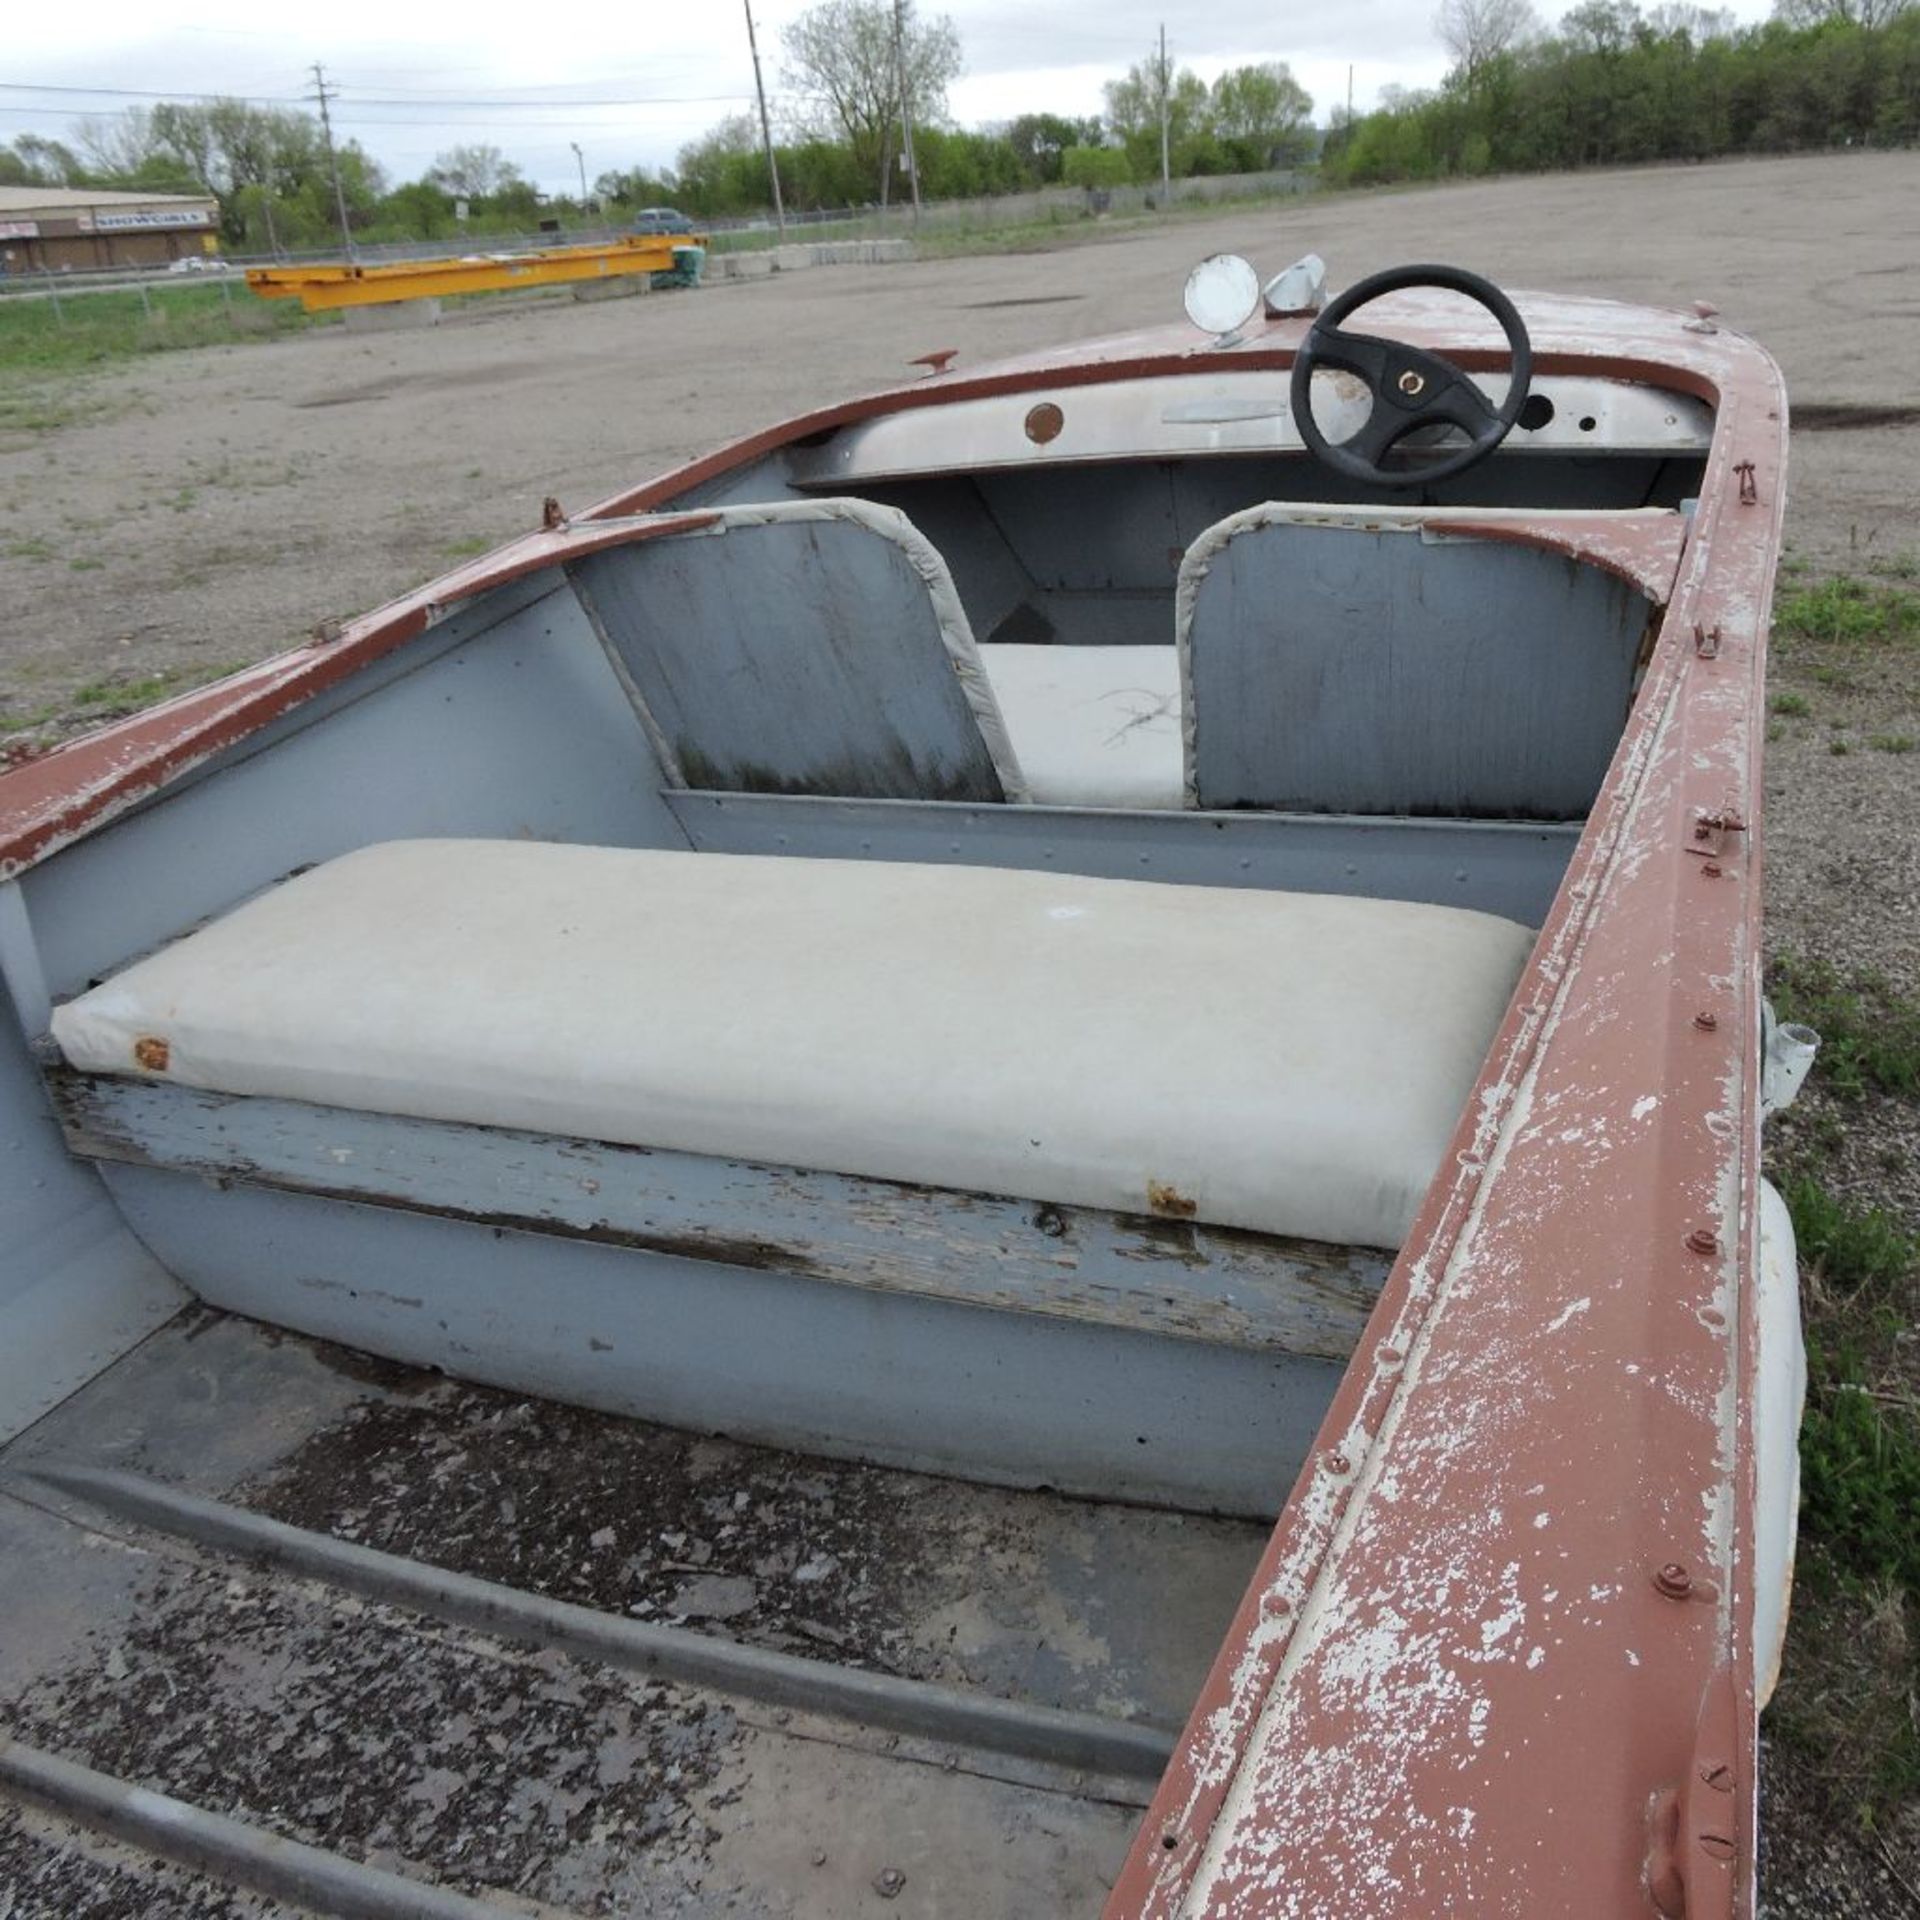 Aluminum Loanstar approx. 16' Boat, sgl. axle trailer.